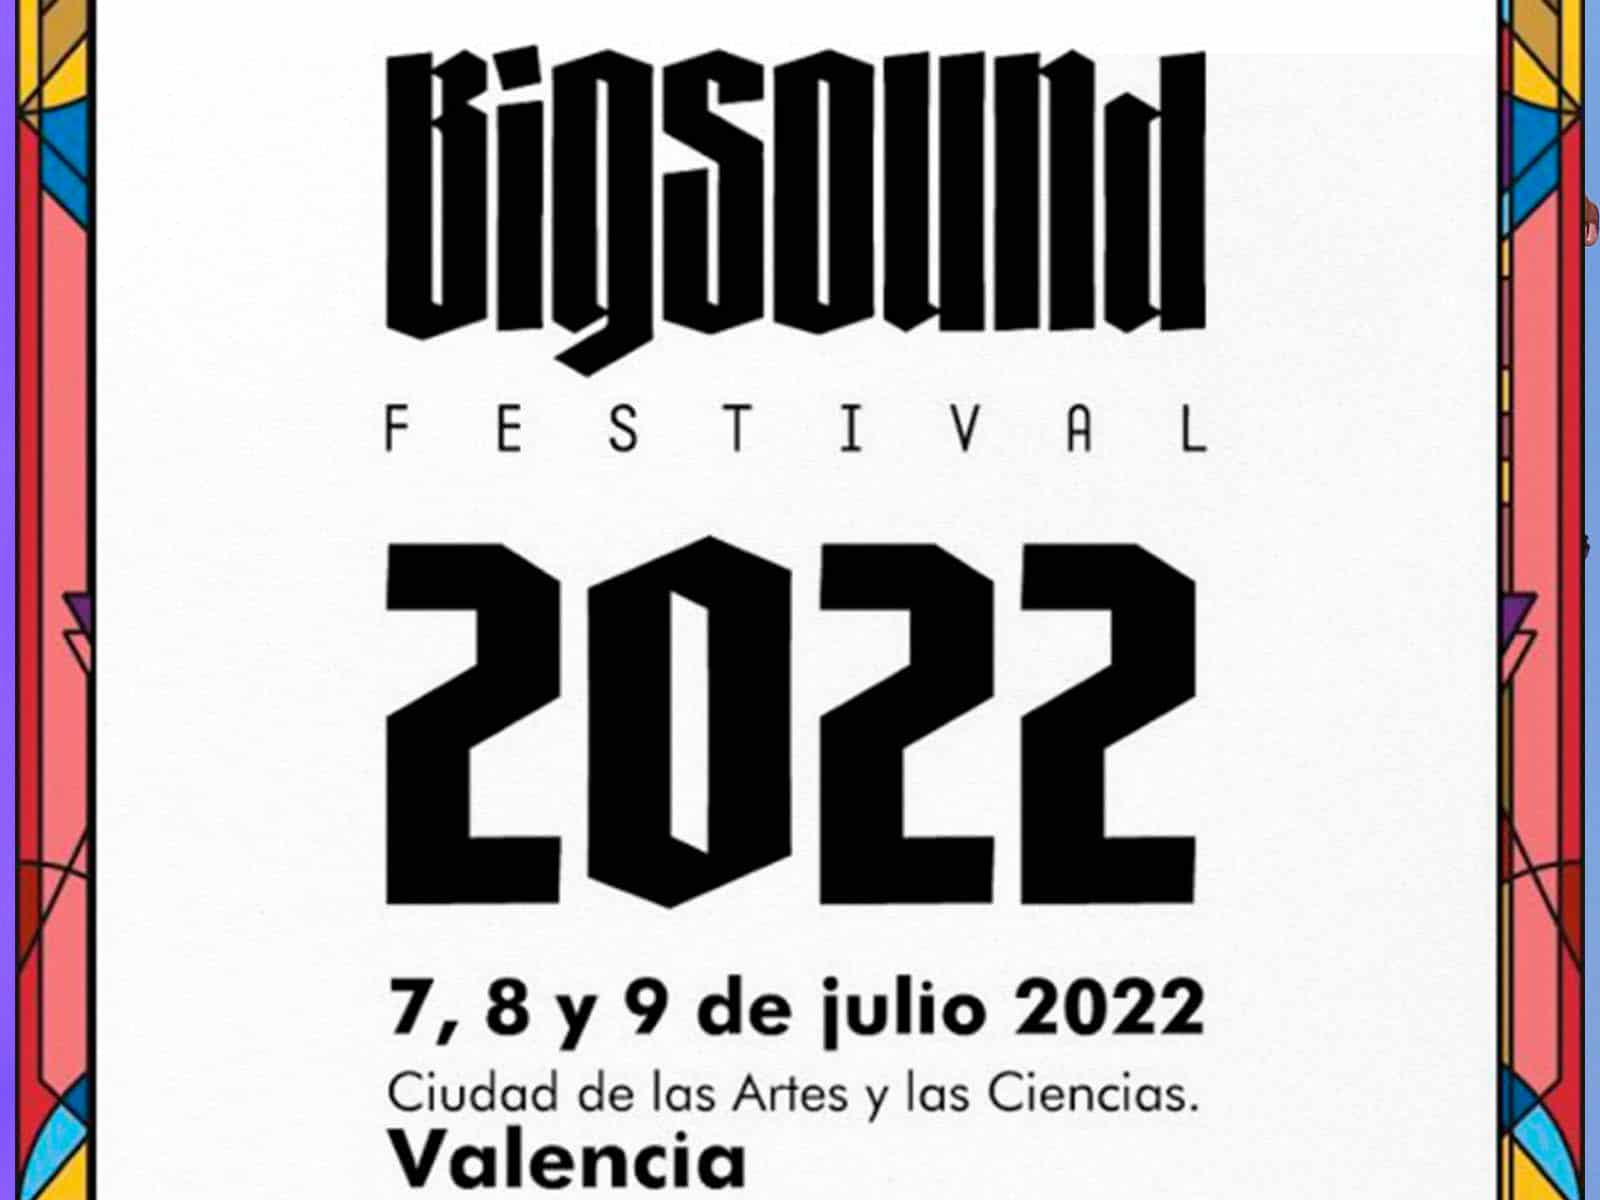 Big Sound Festival 2022: Nicky Jam, Nathy Peluso, C. Tangana and more